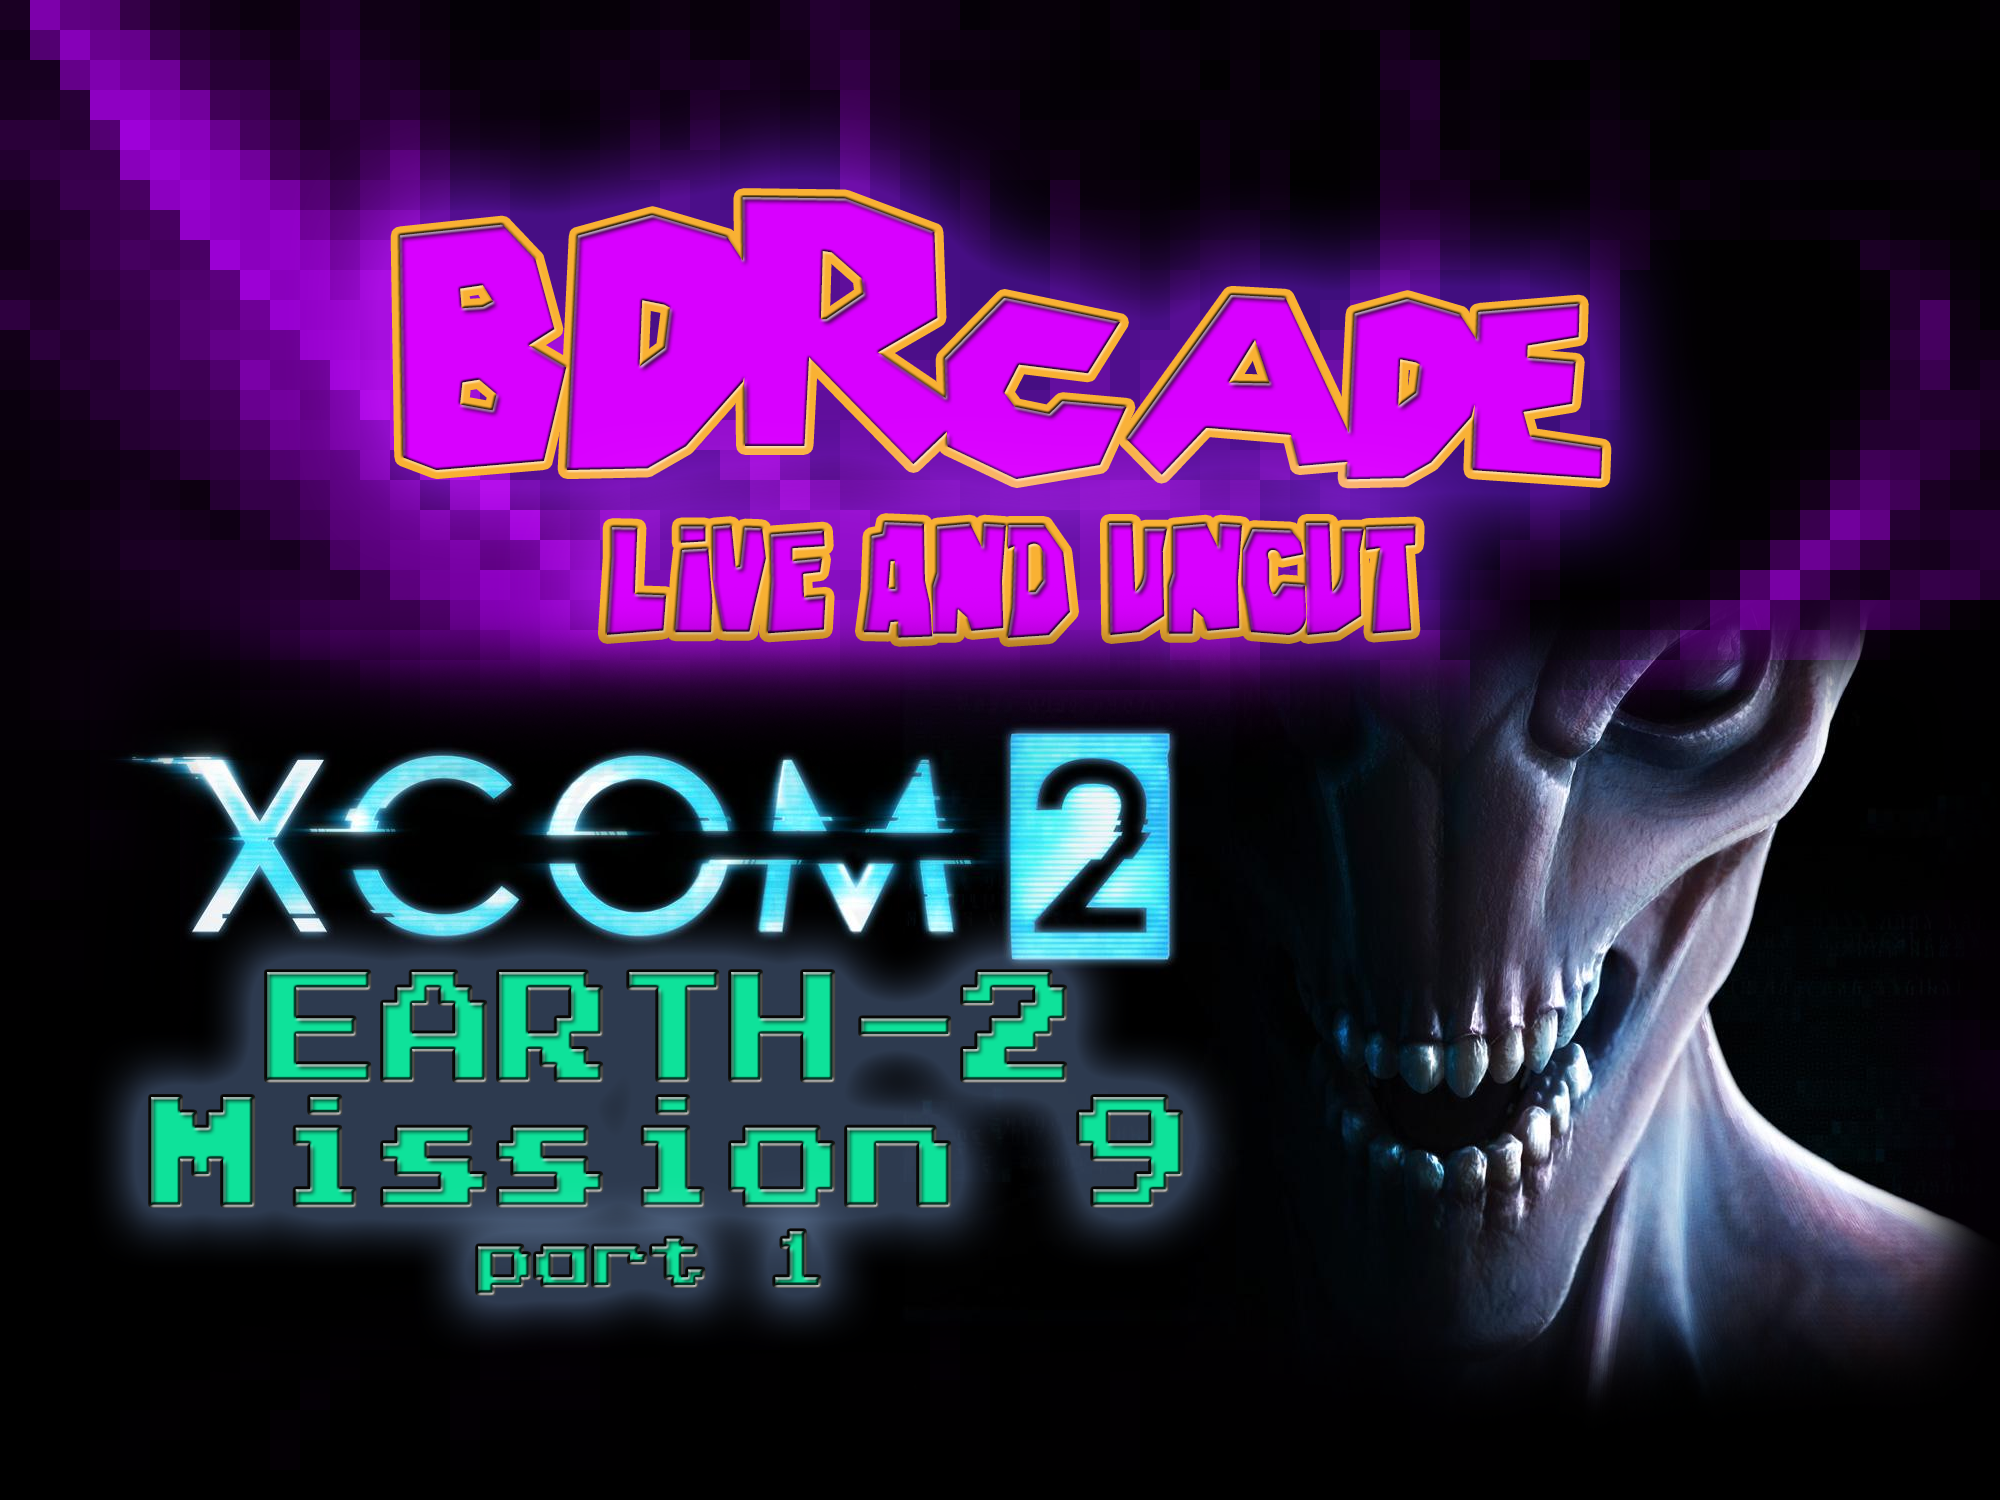 XCOM 2 (Earth-2) : Mission 9 Part 1 – A BDRcade Live Stream